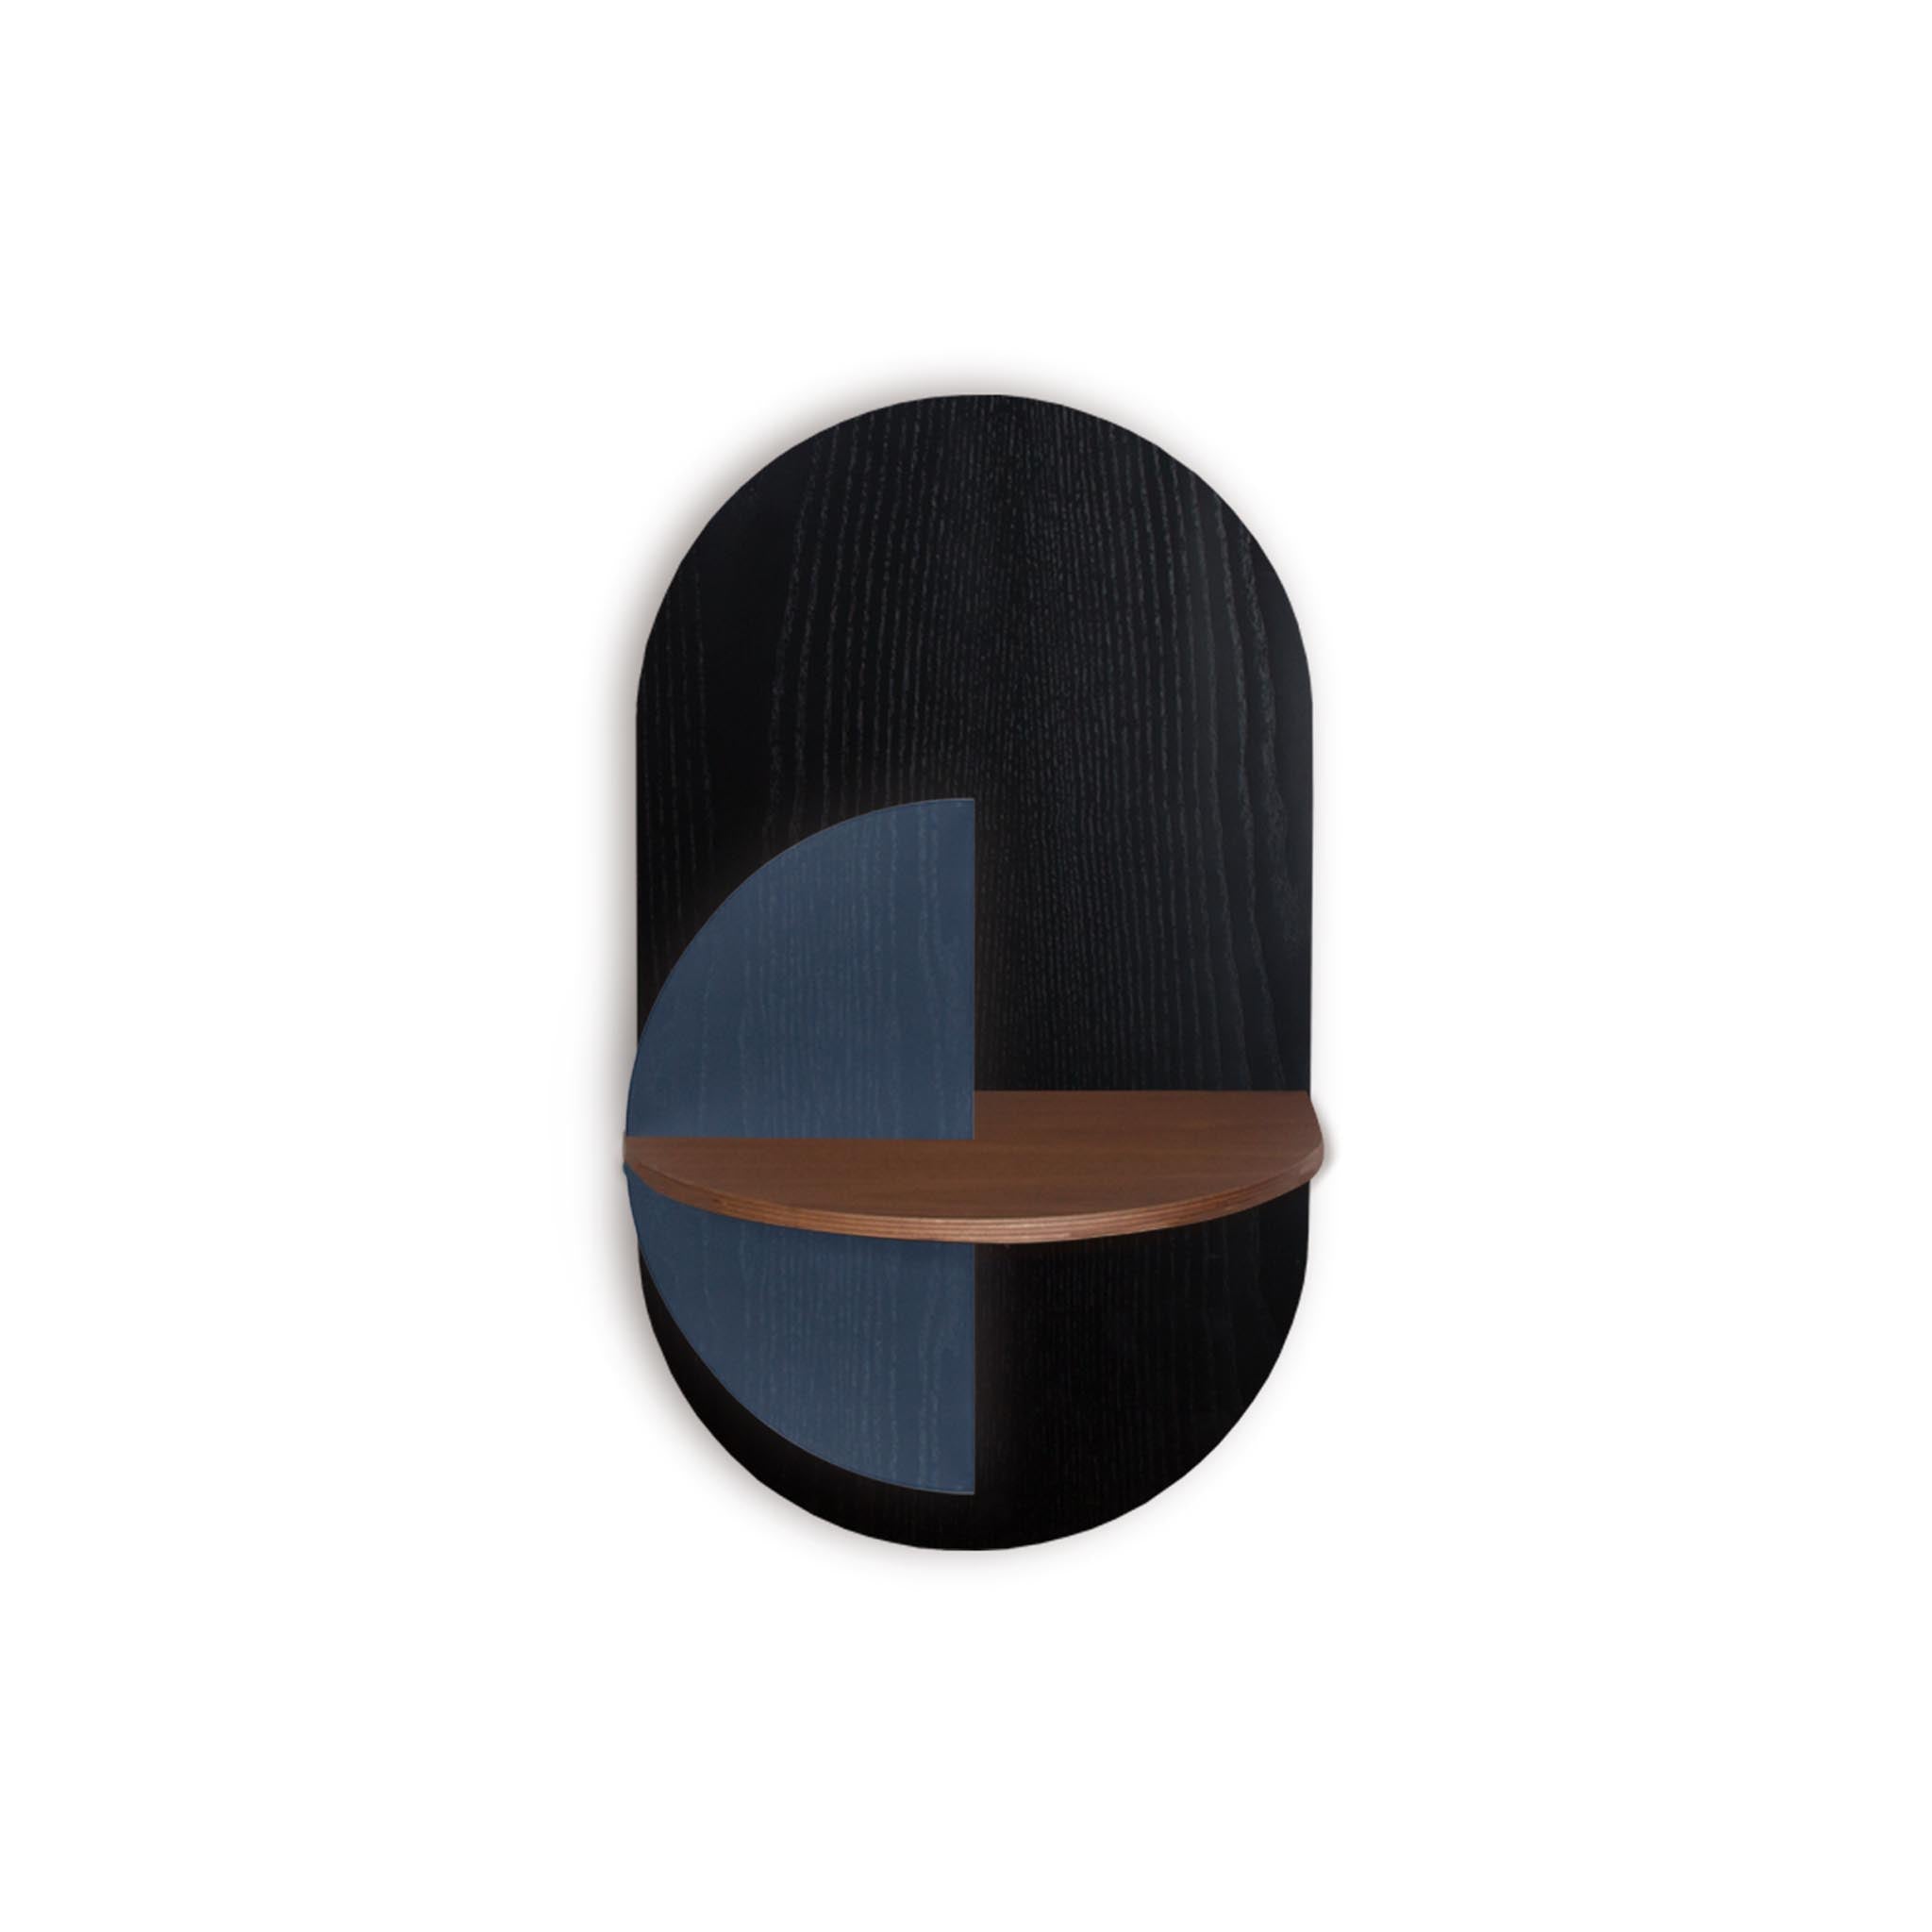 Alba slim floating nightstand · Black oval